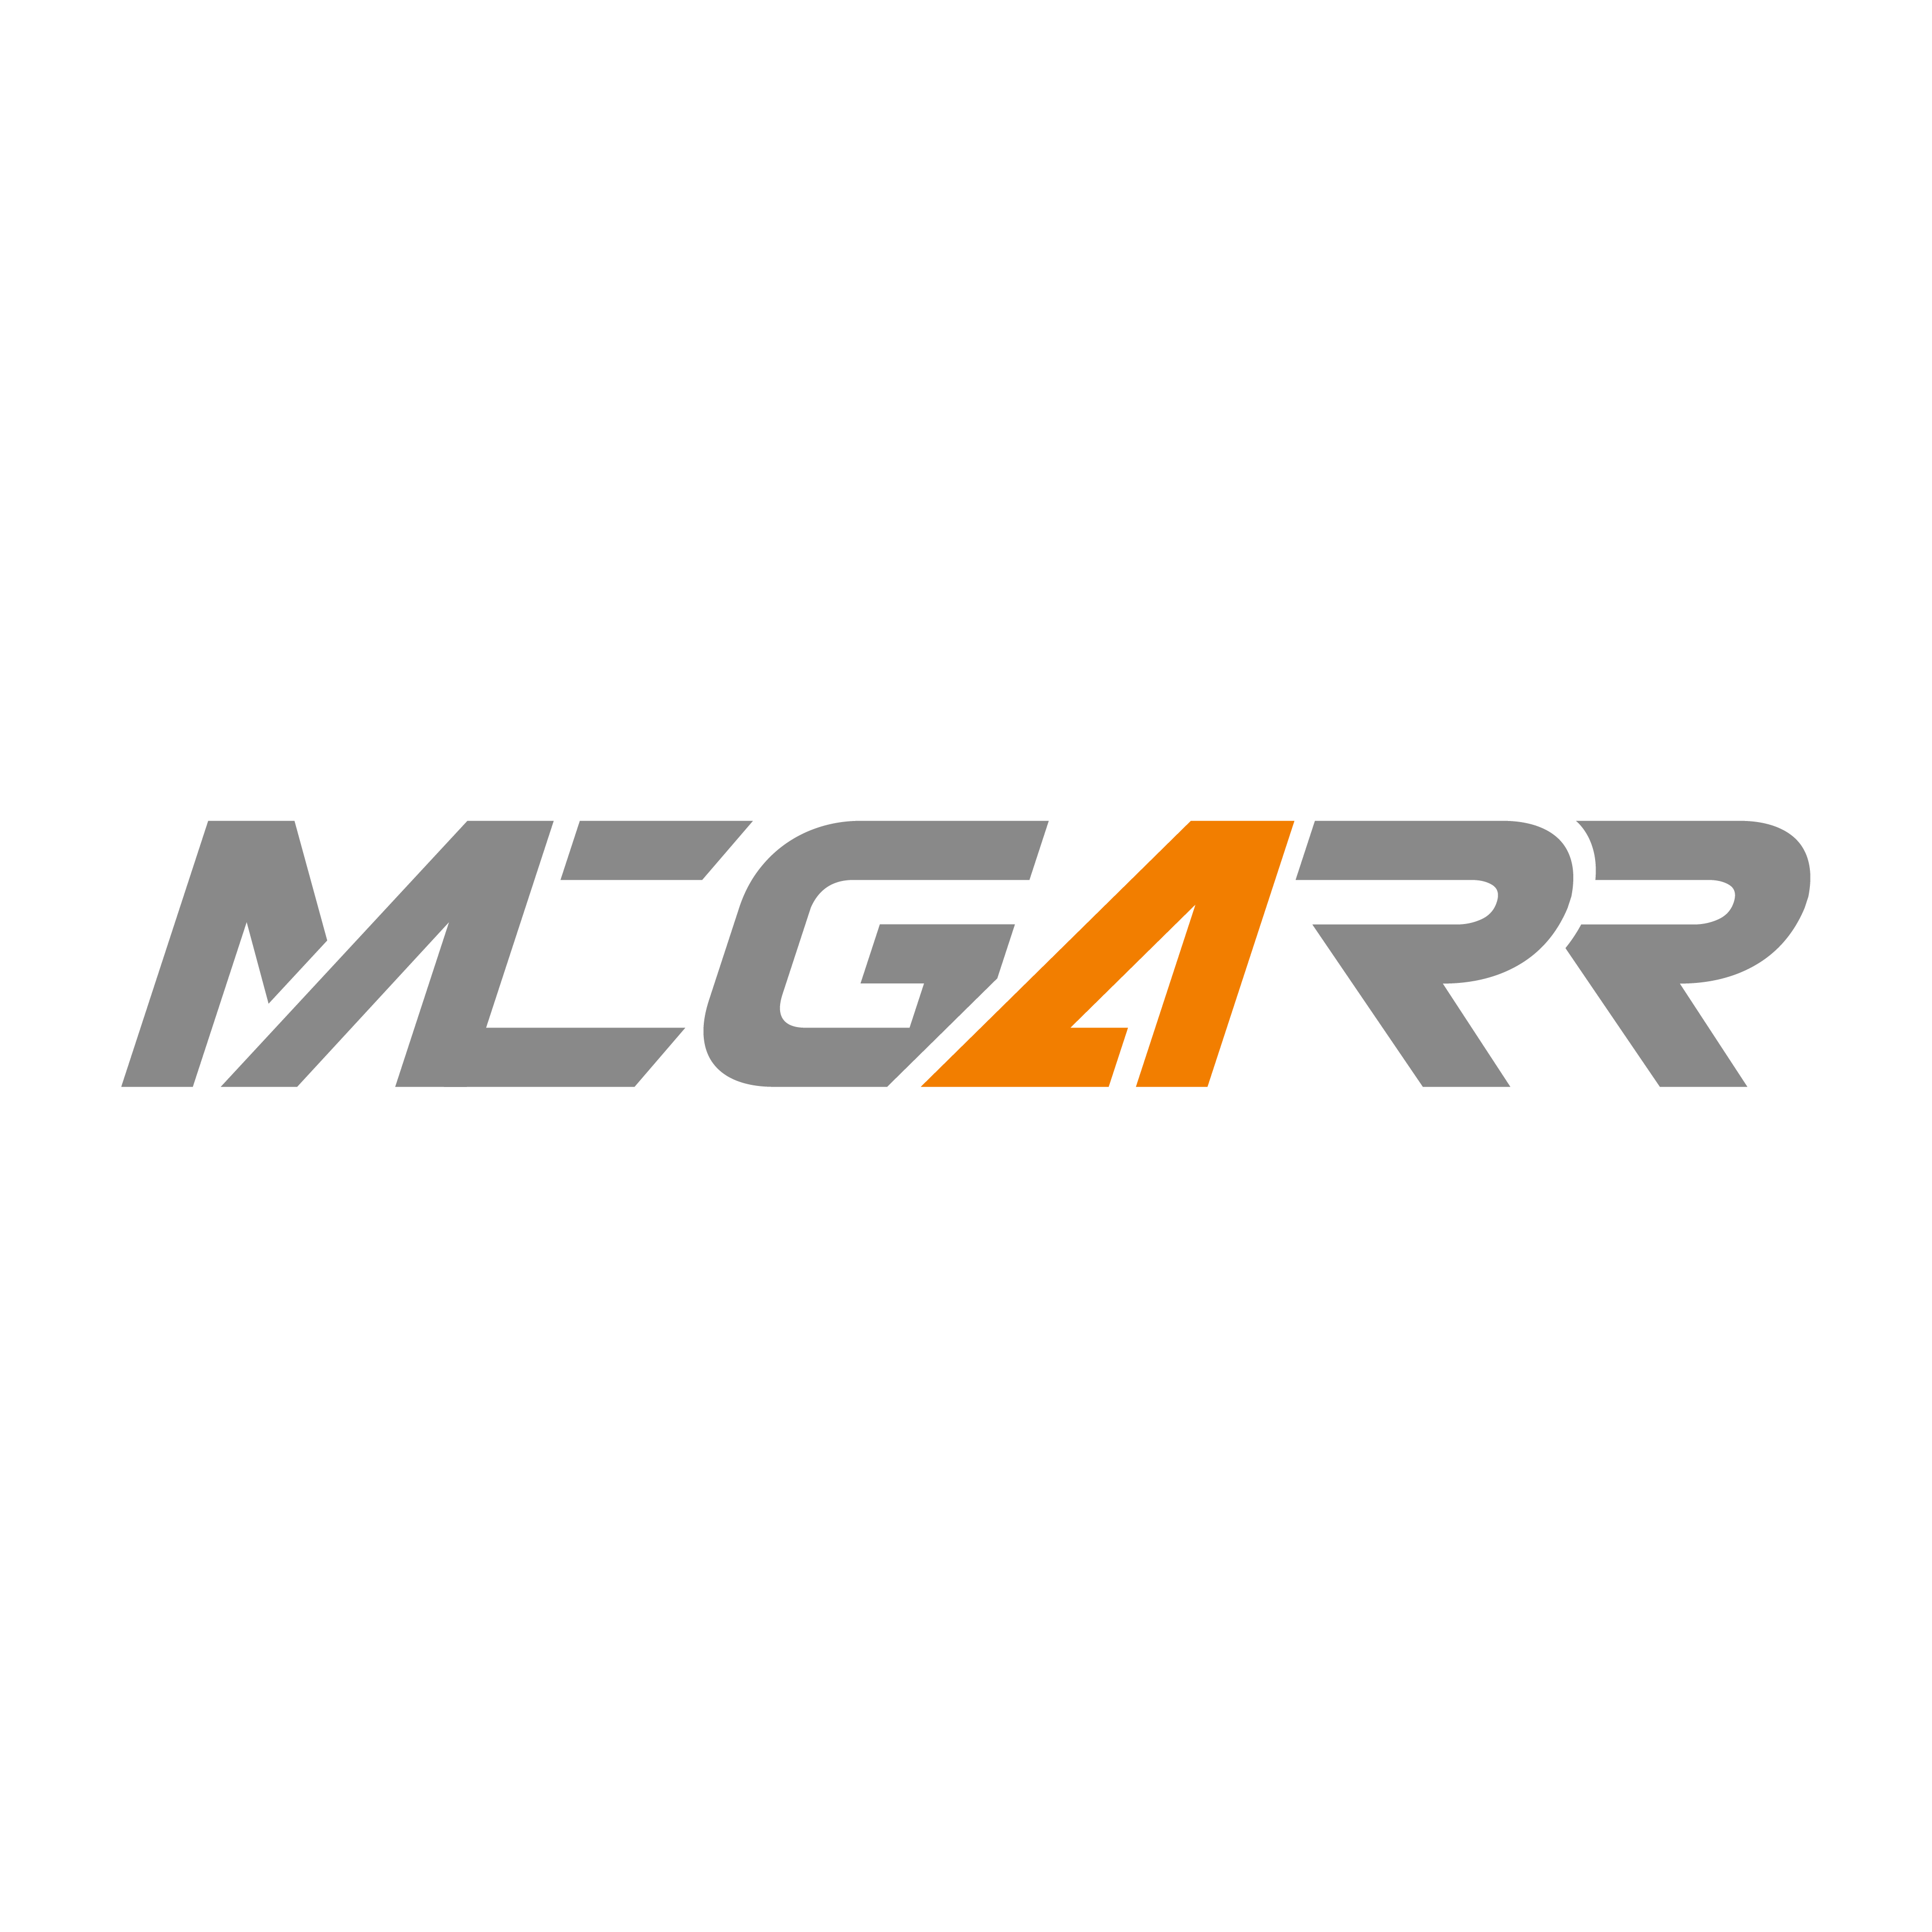 Mcgarr